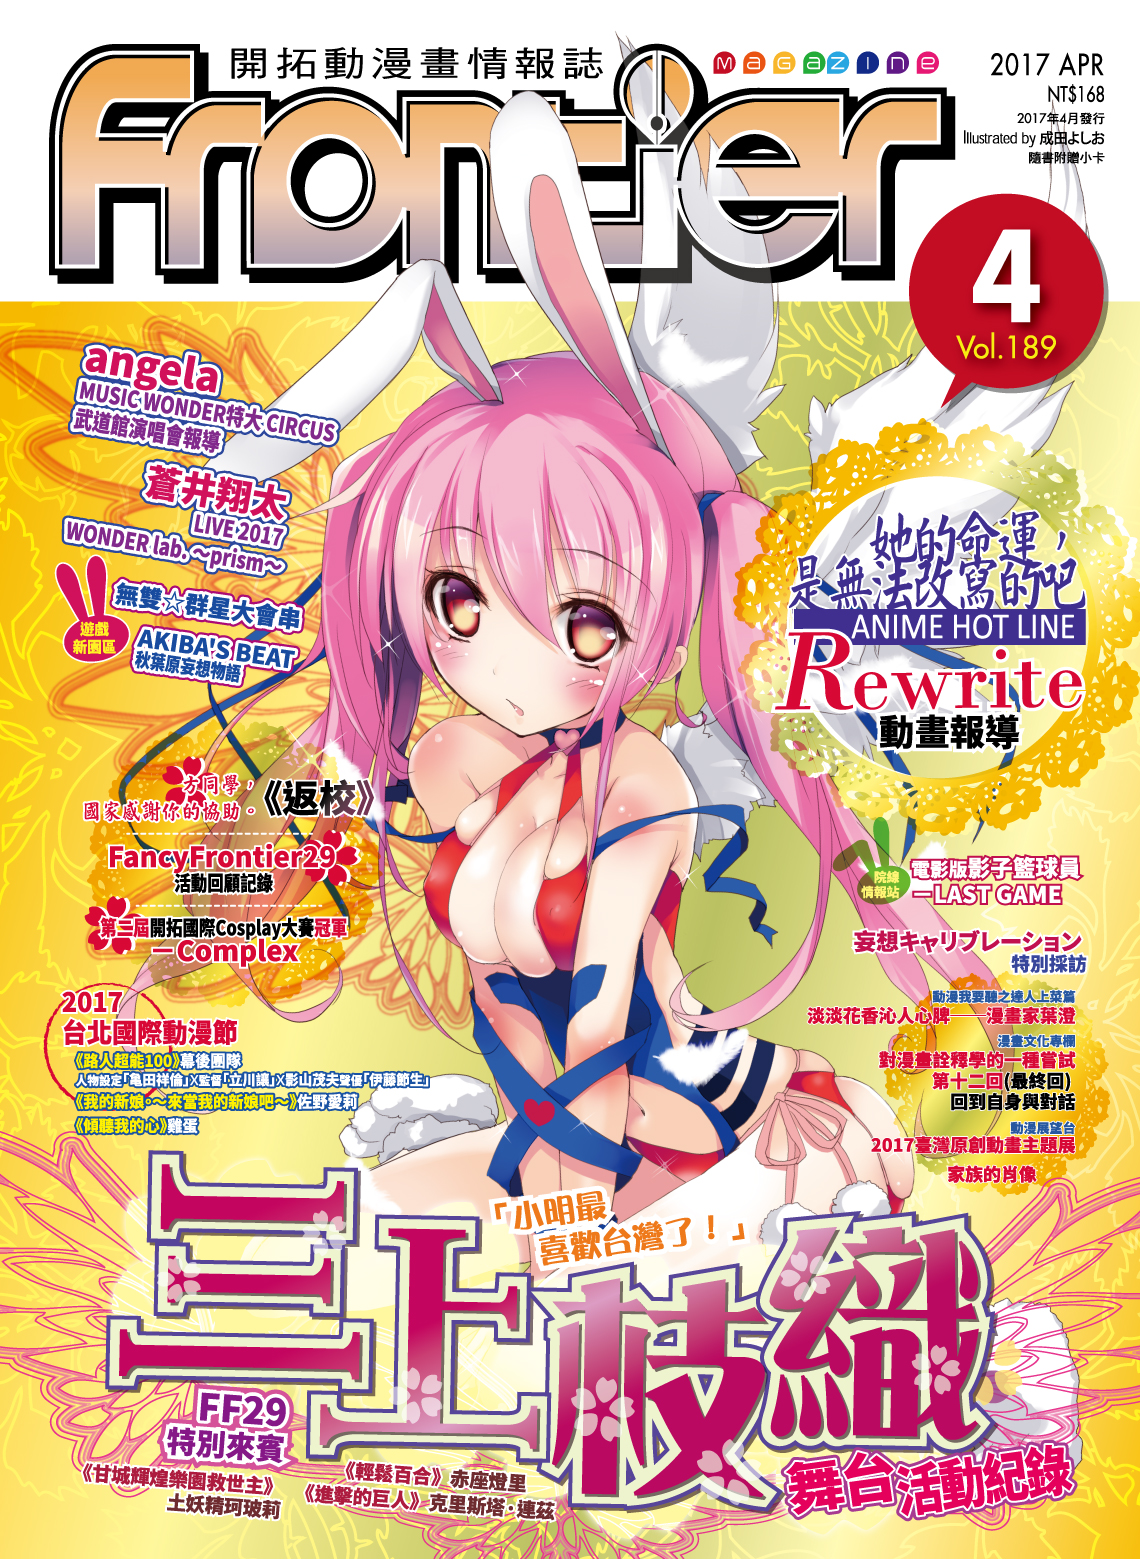 mar2017 magazine cover